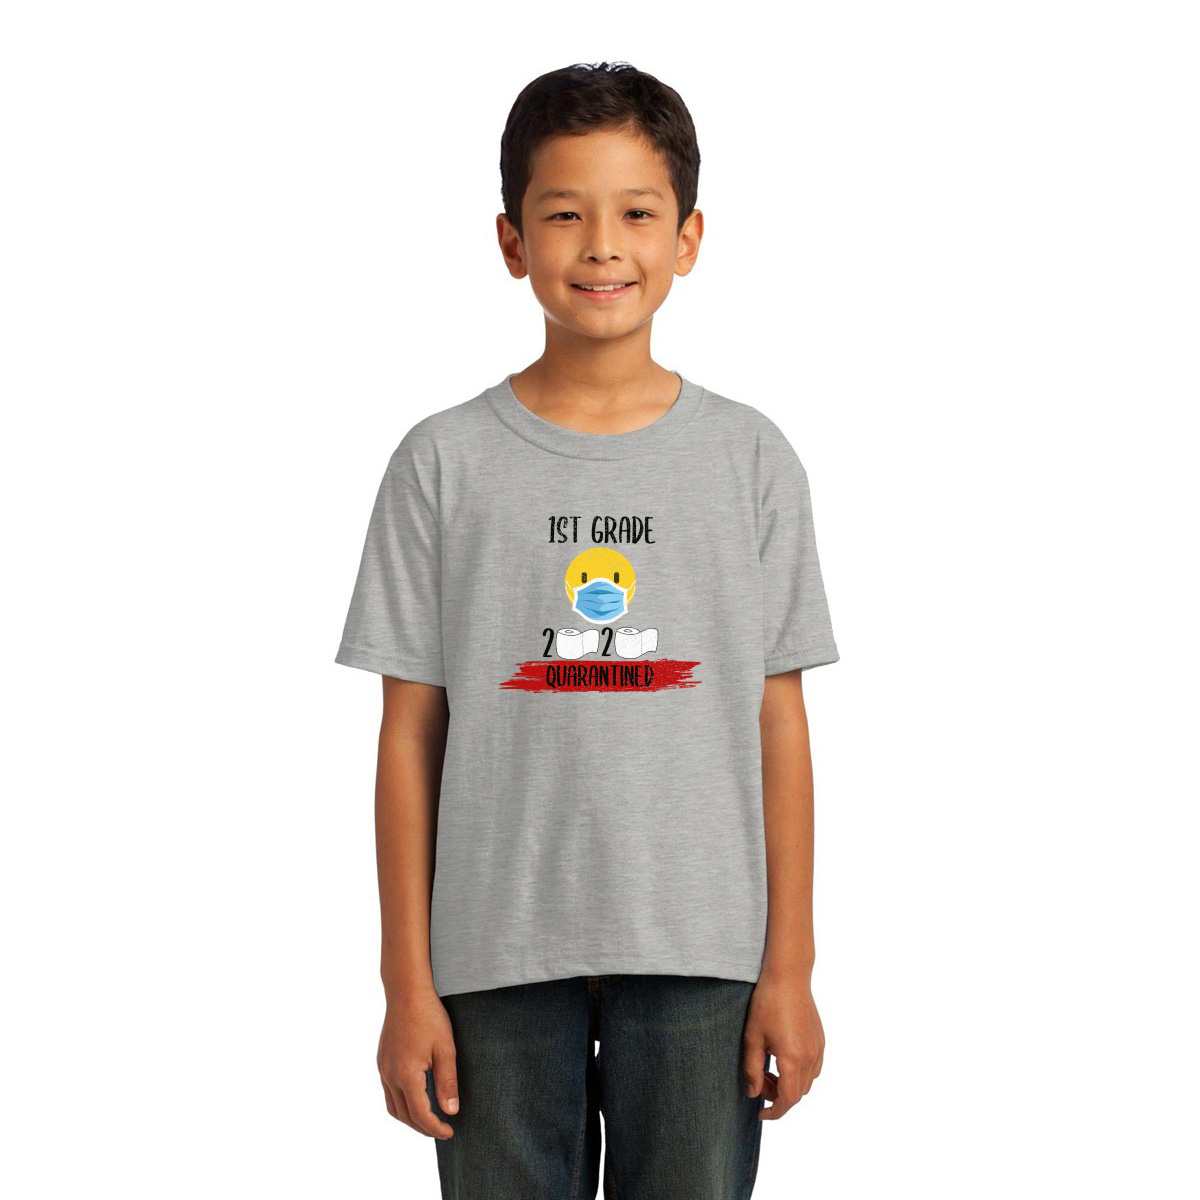 1st Grader Quarantined Kids T-shirt | Gray